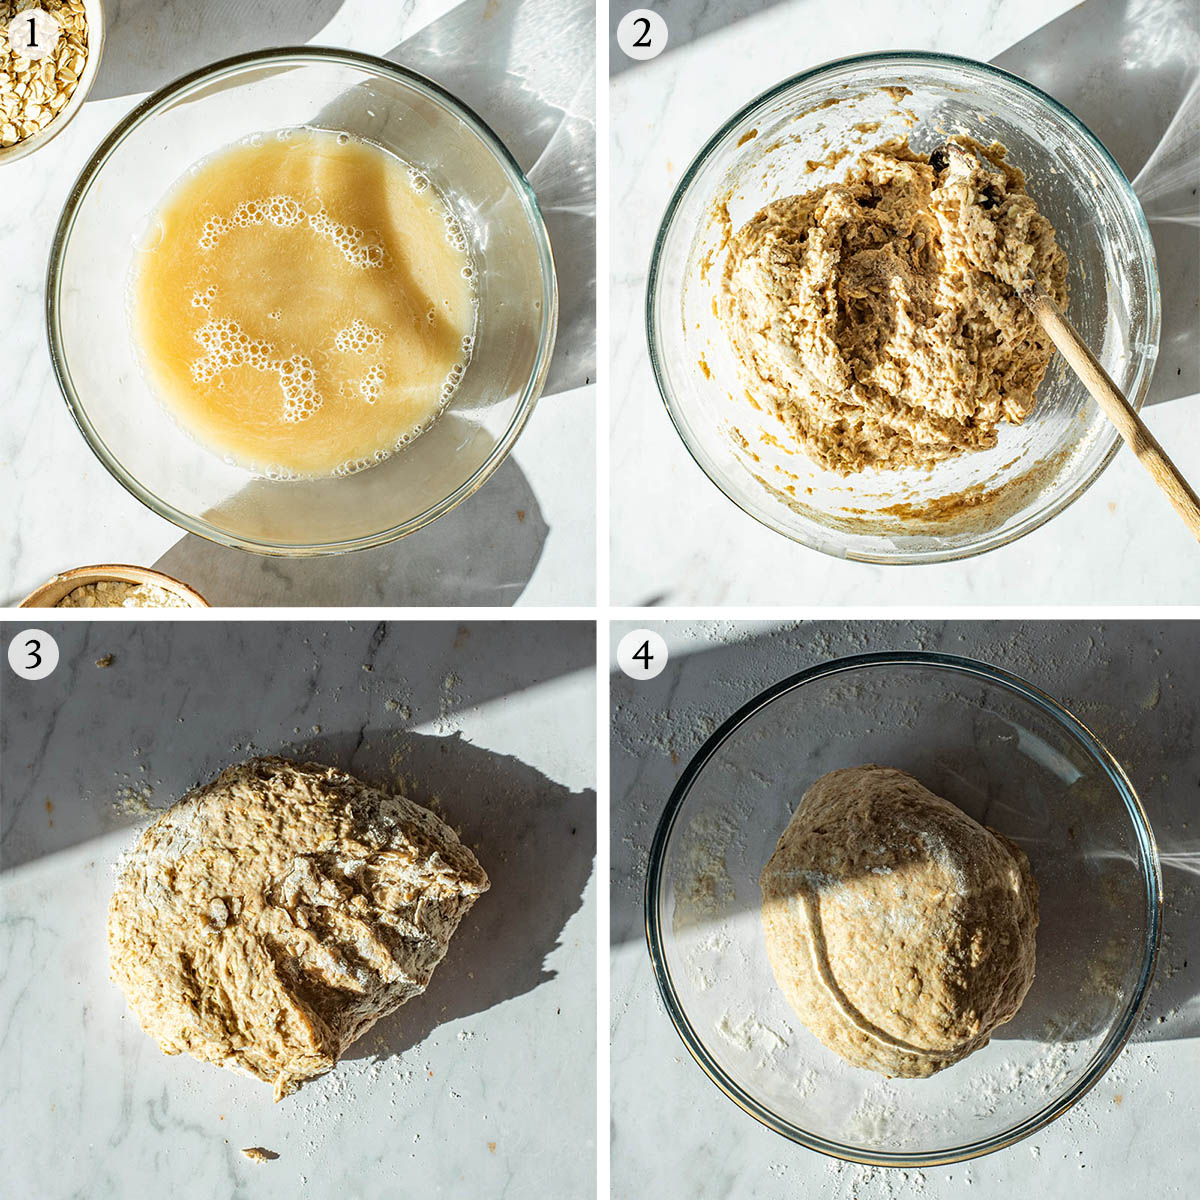 Honey oat bread steps 1 to 4.